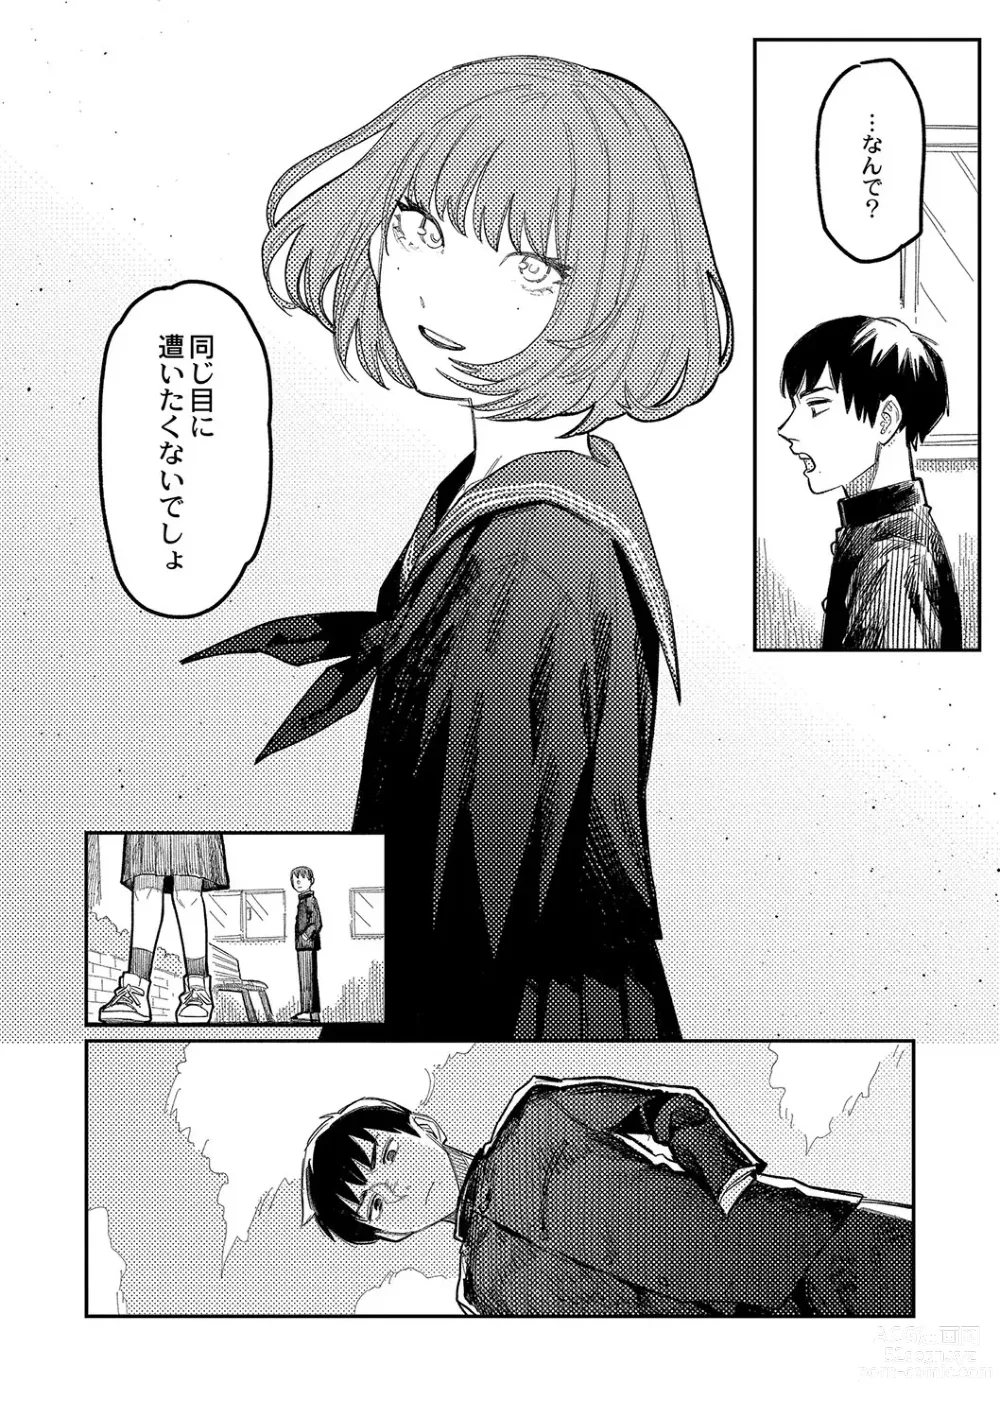 Page 7 of manga Oyasumi, Teen - Good Night, Goodbye